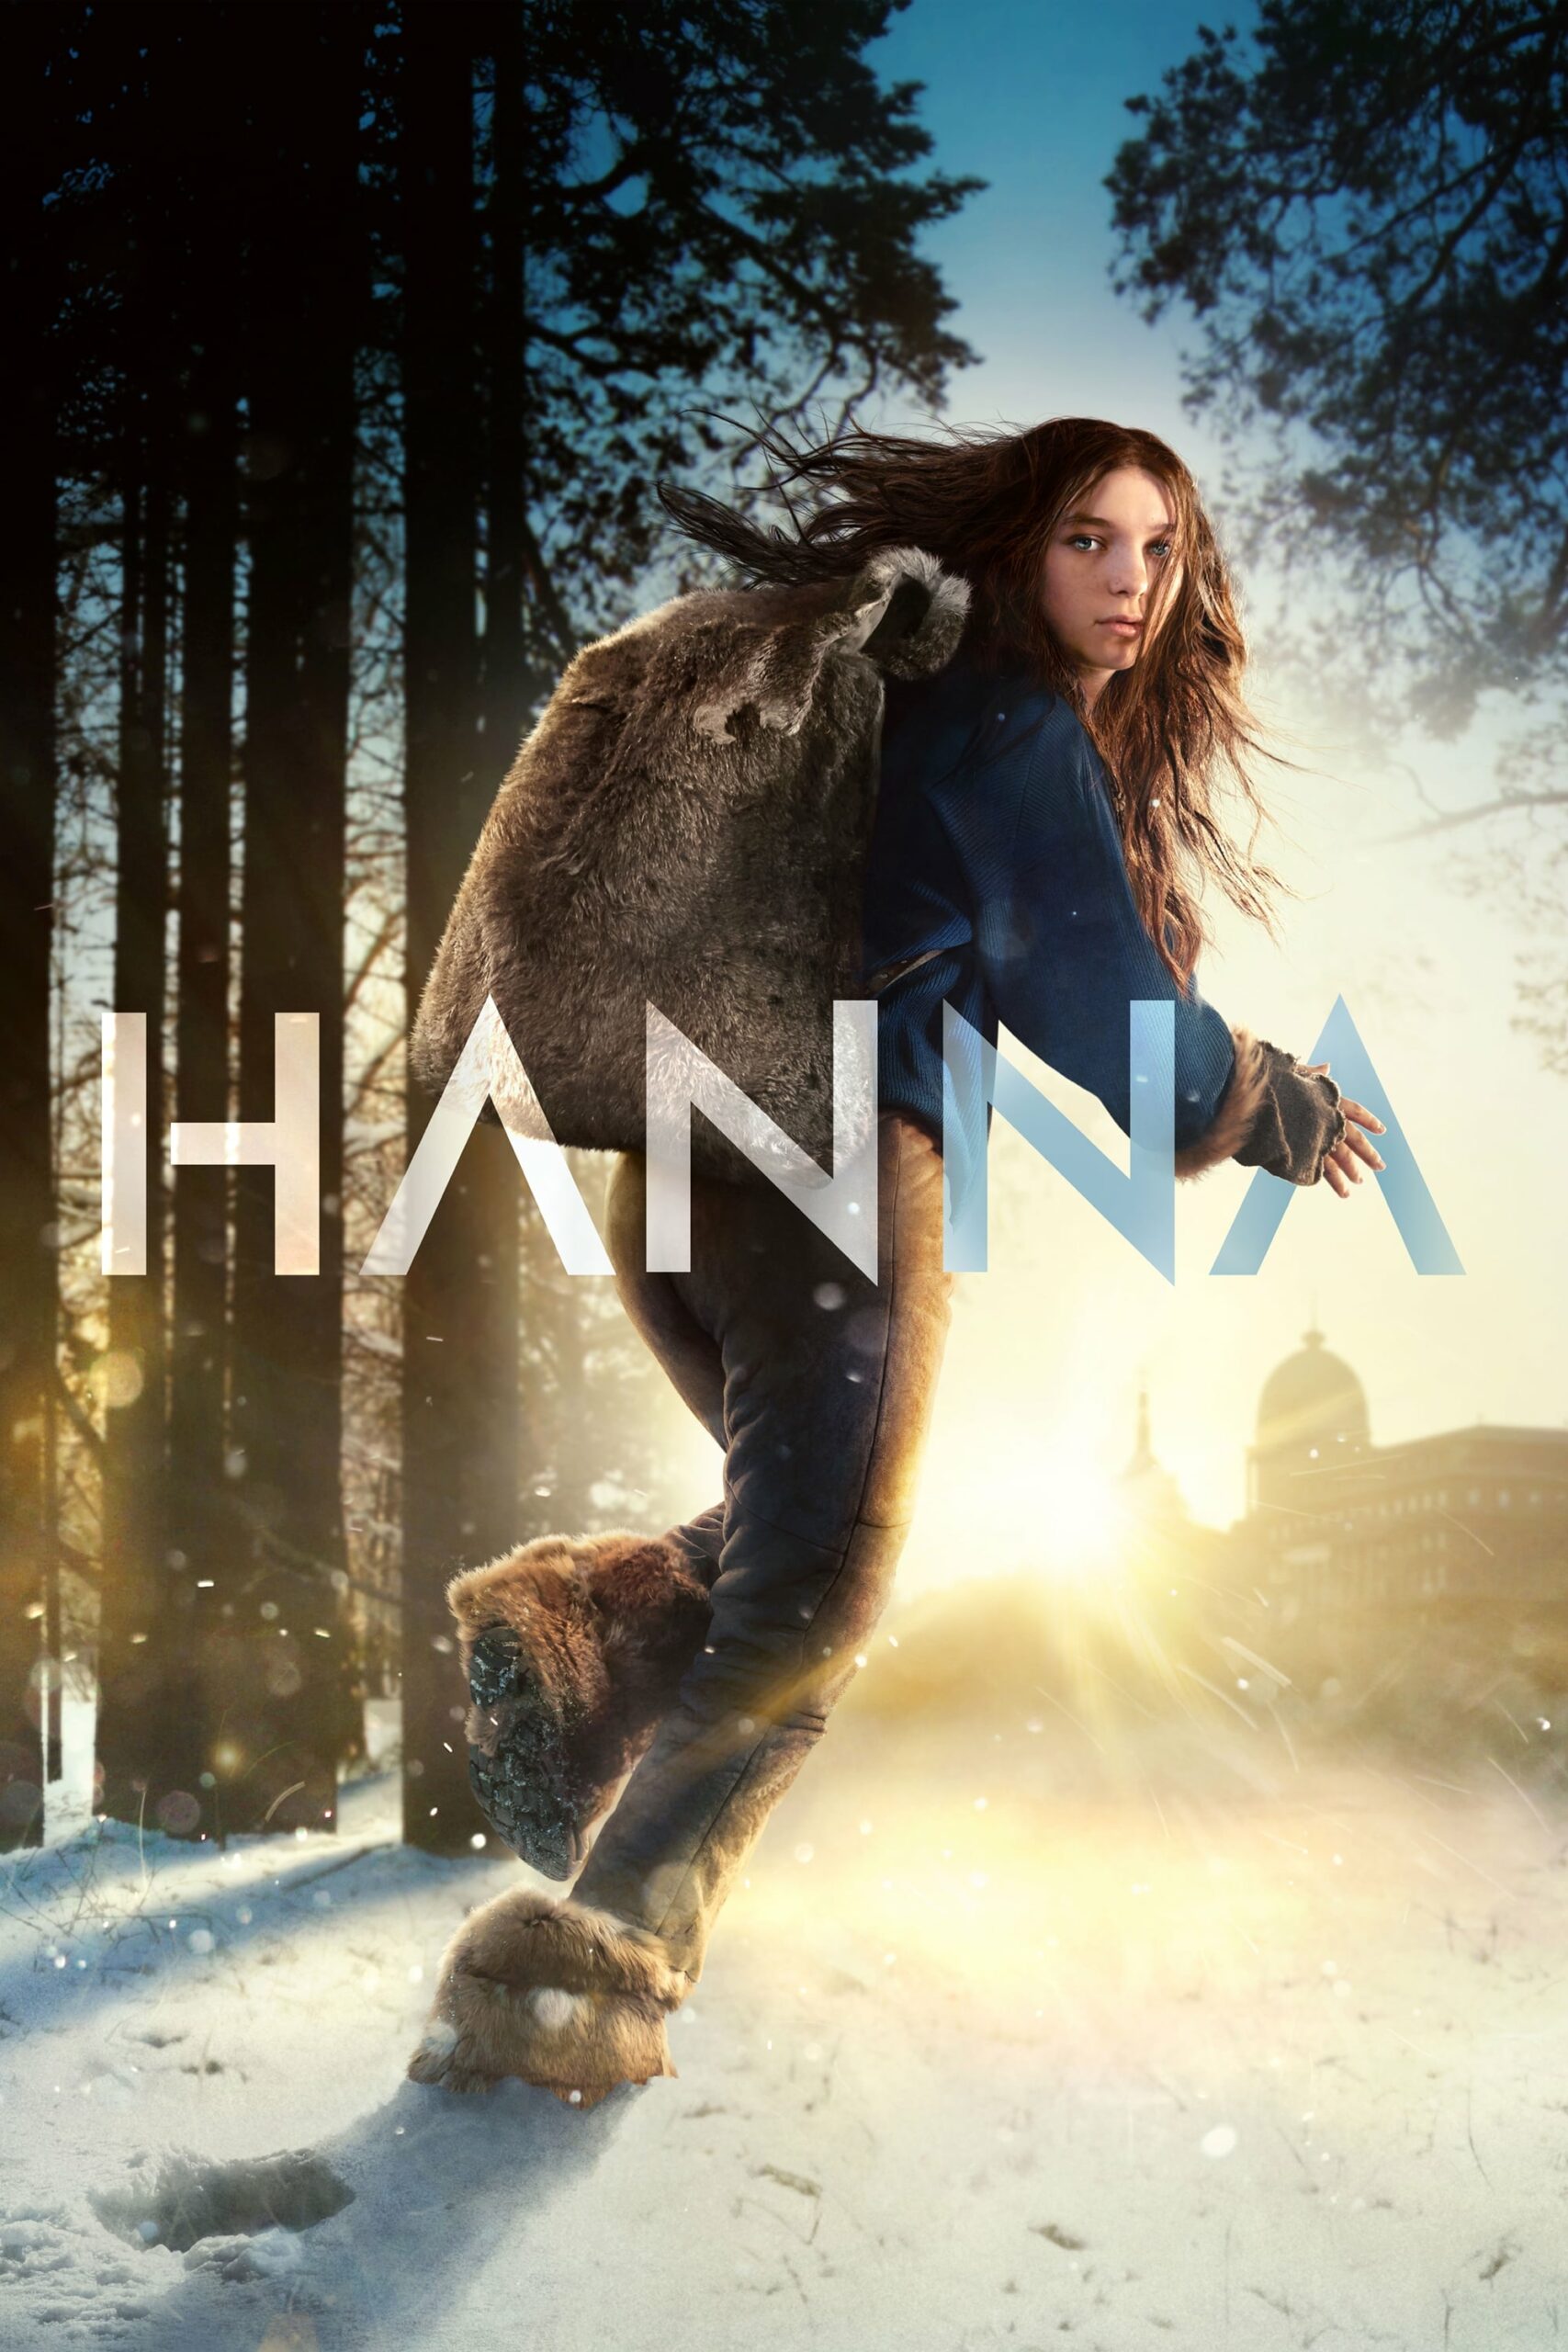 Plakát pro film “Hanna”